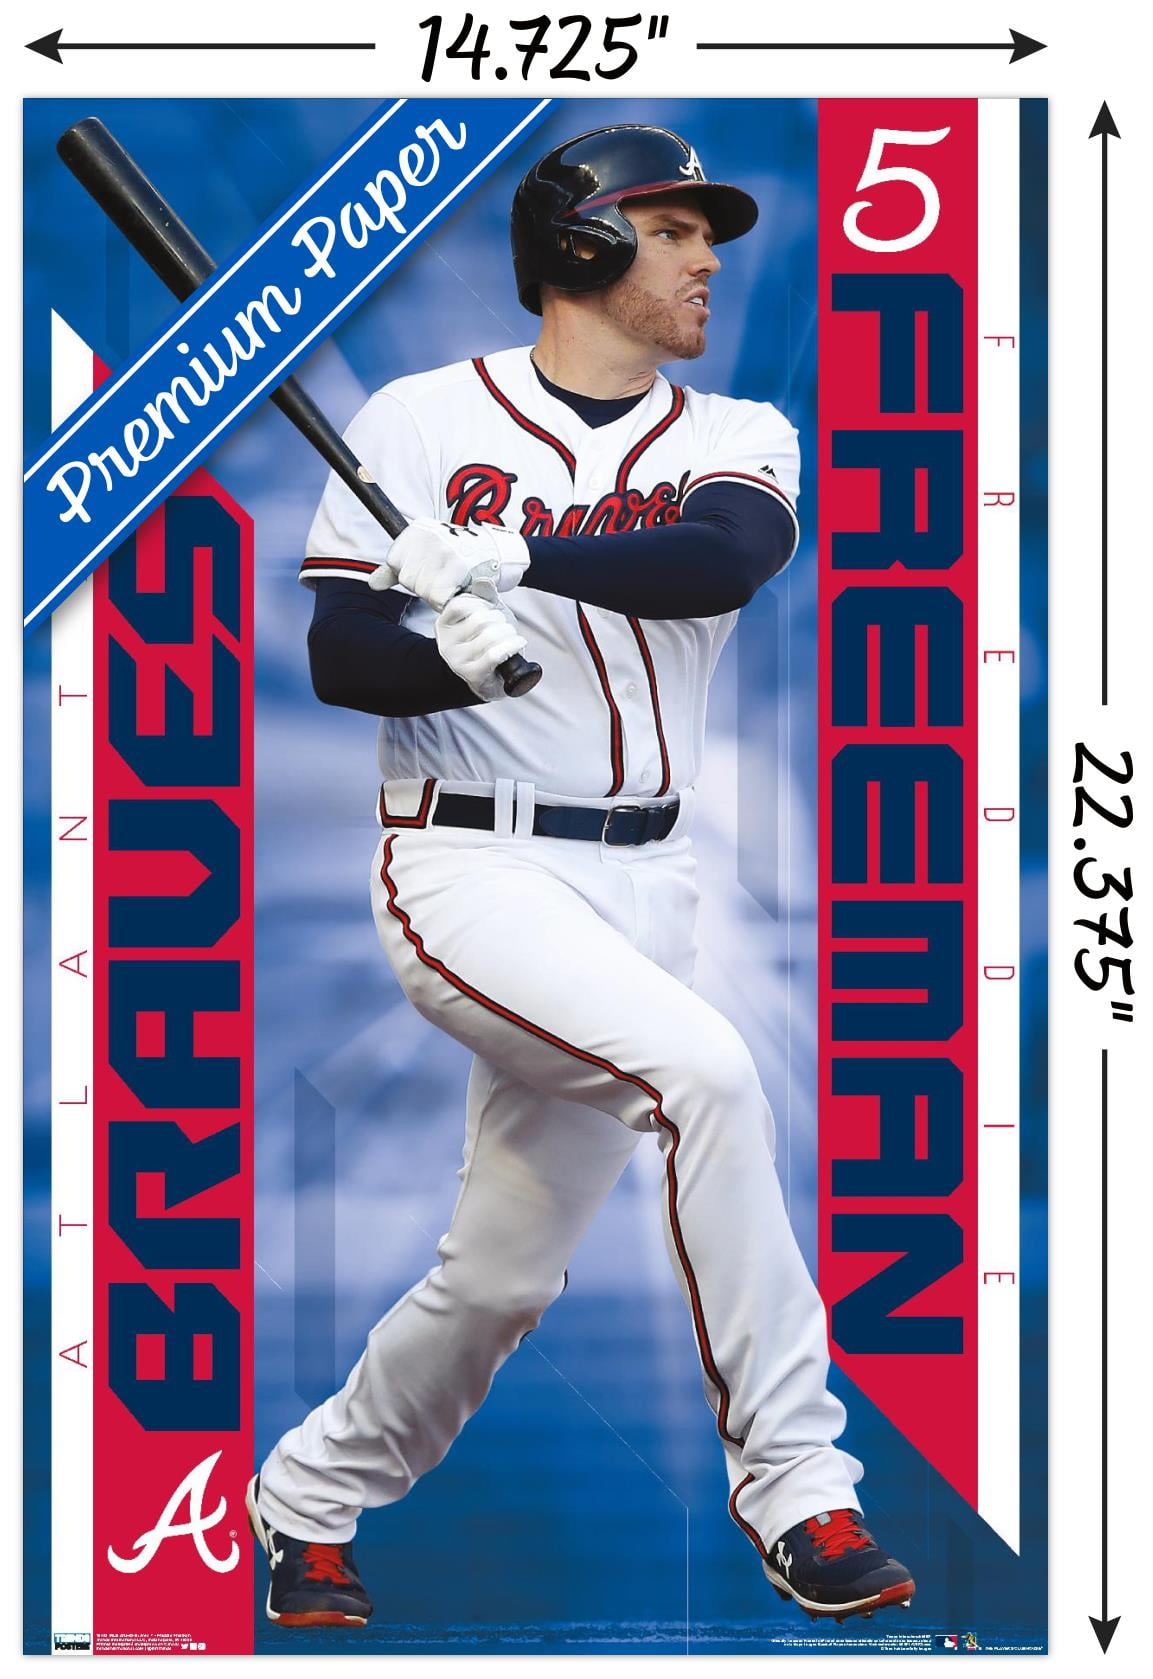 Freddie Freeman 2018  Atlanta braves wallpaper, Atlanta braves baseball,  Braves